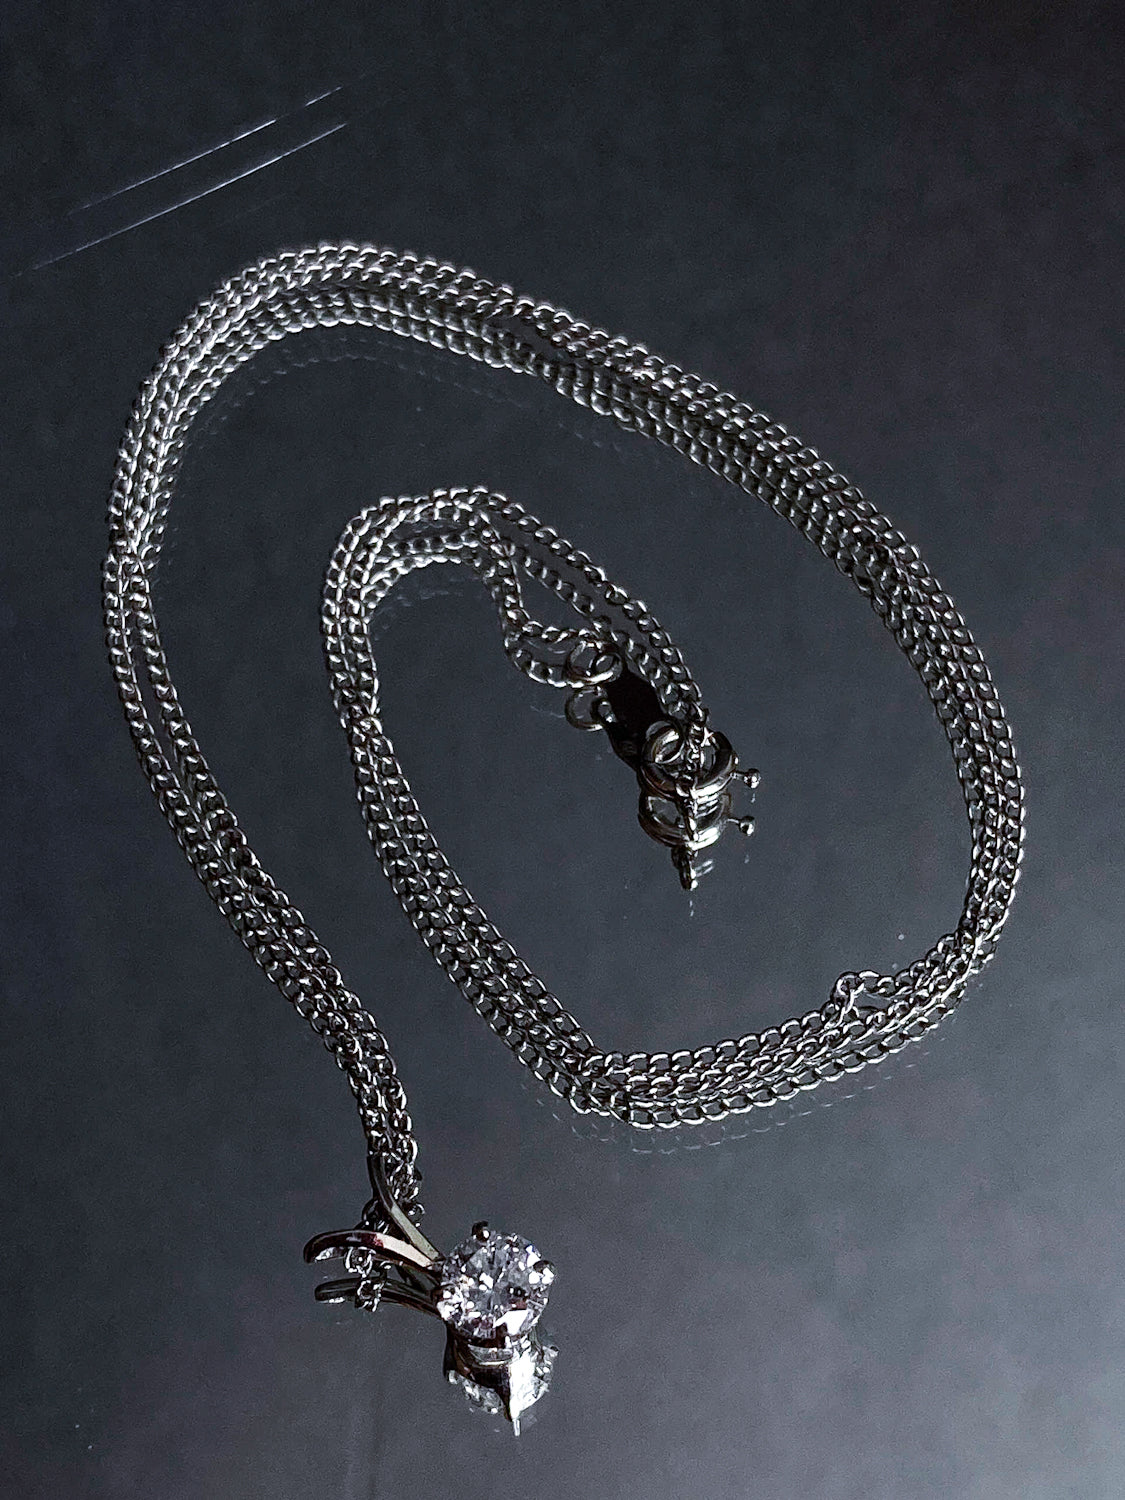 14K White Gold Solitaire Brilliant Diamond Drop Pendant Necklace Full Chain on Mirror Wrapped in Swirl